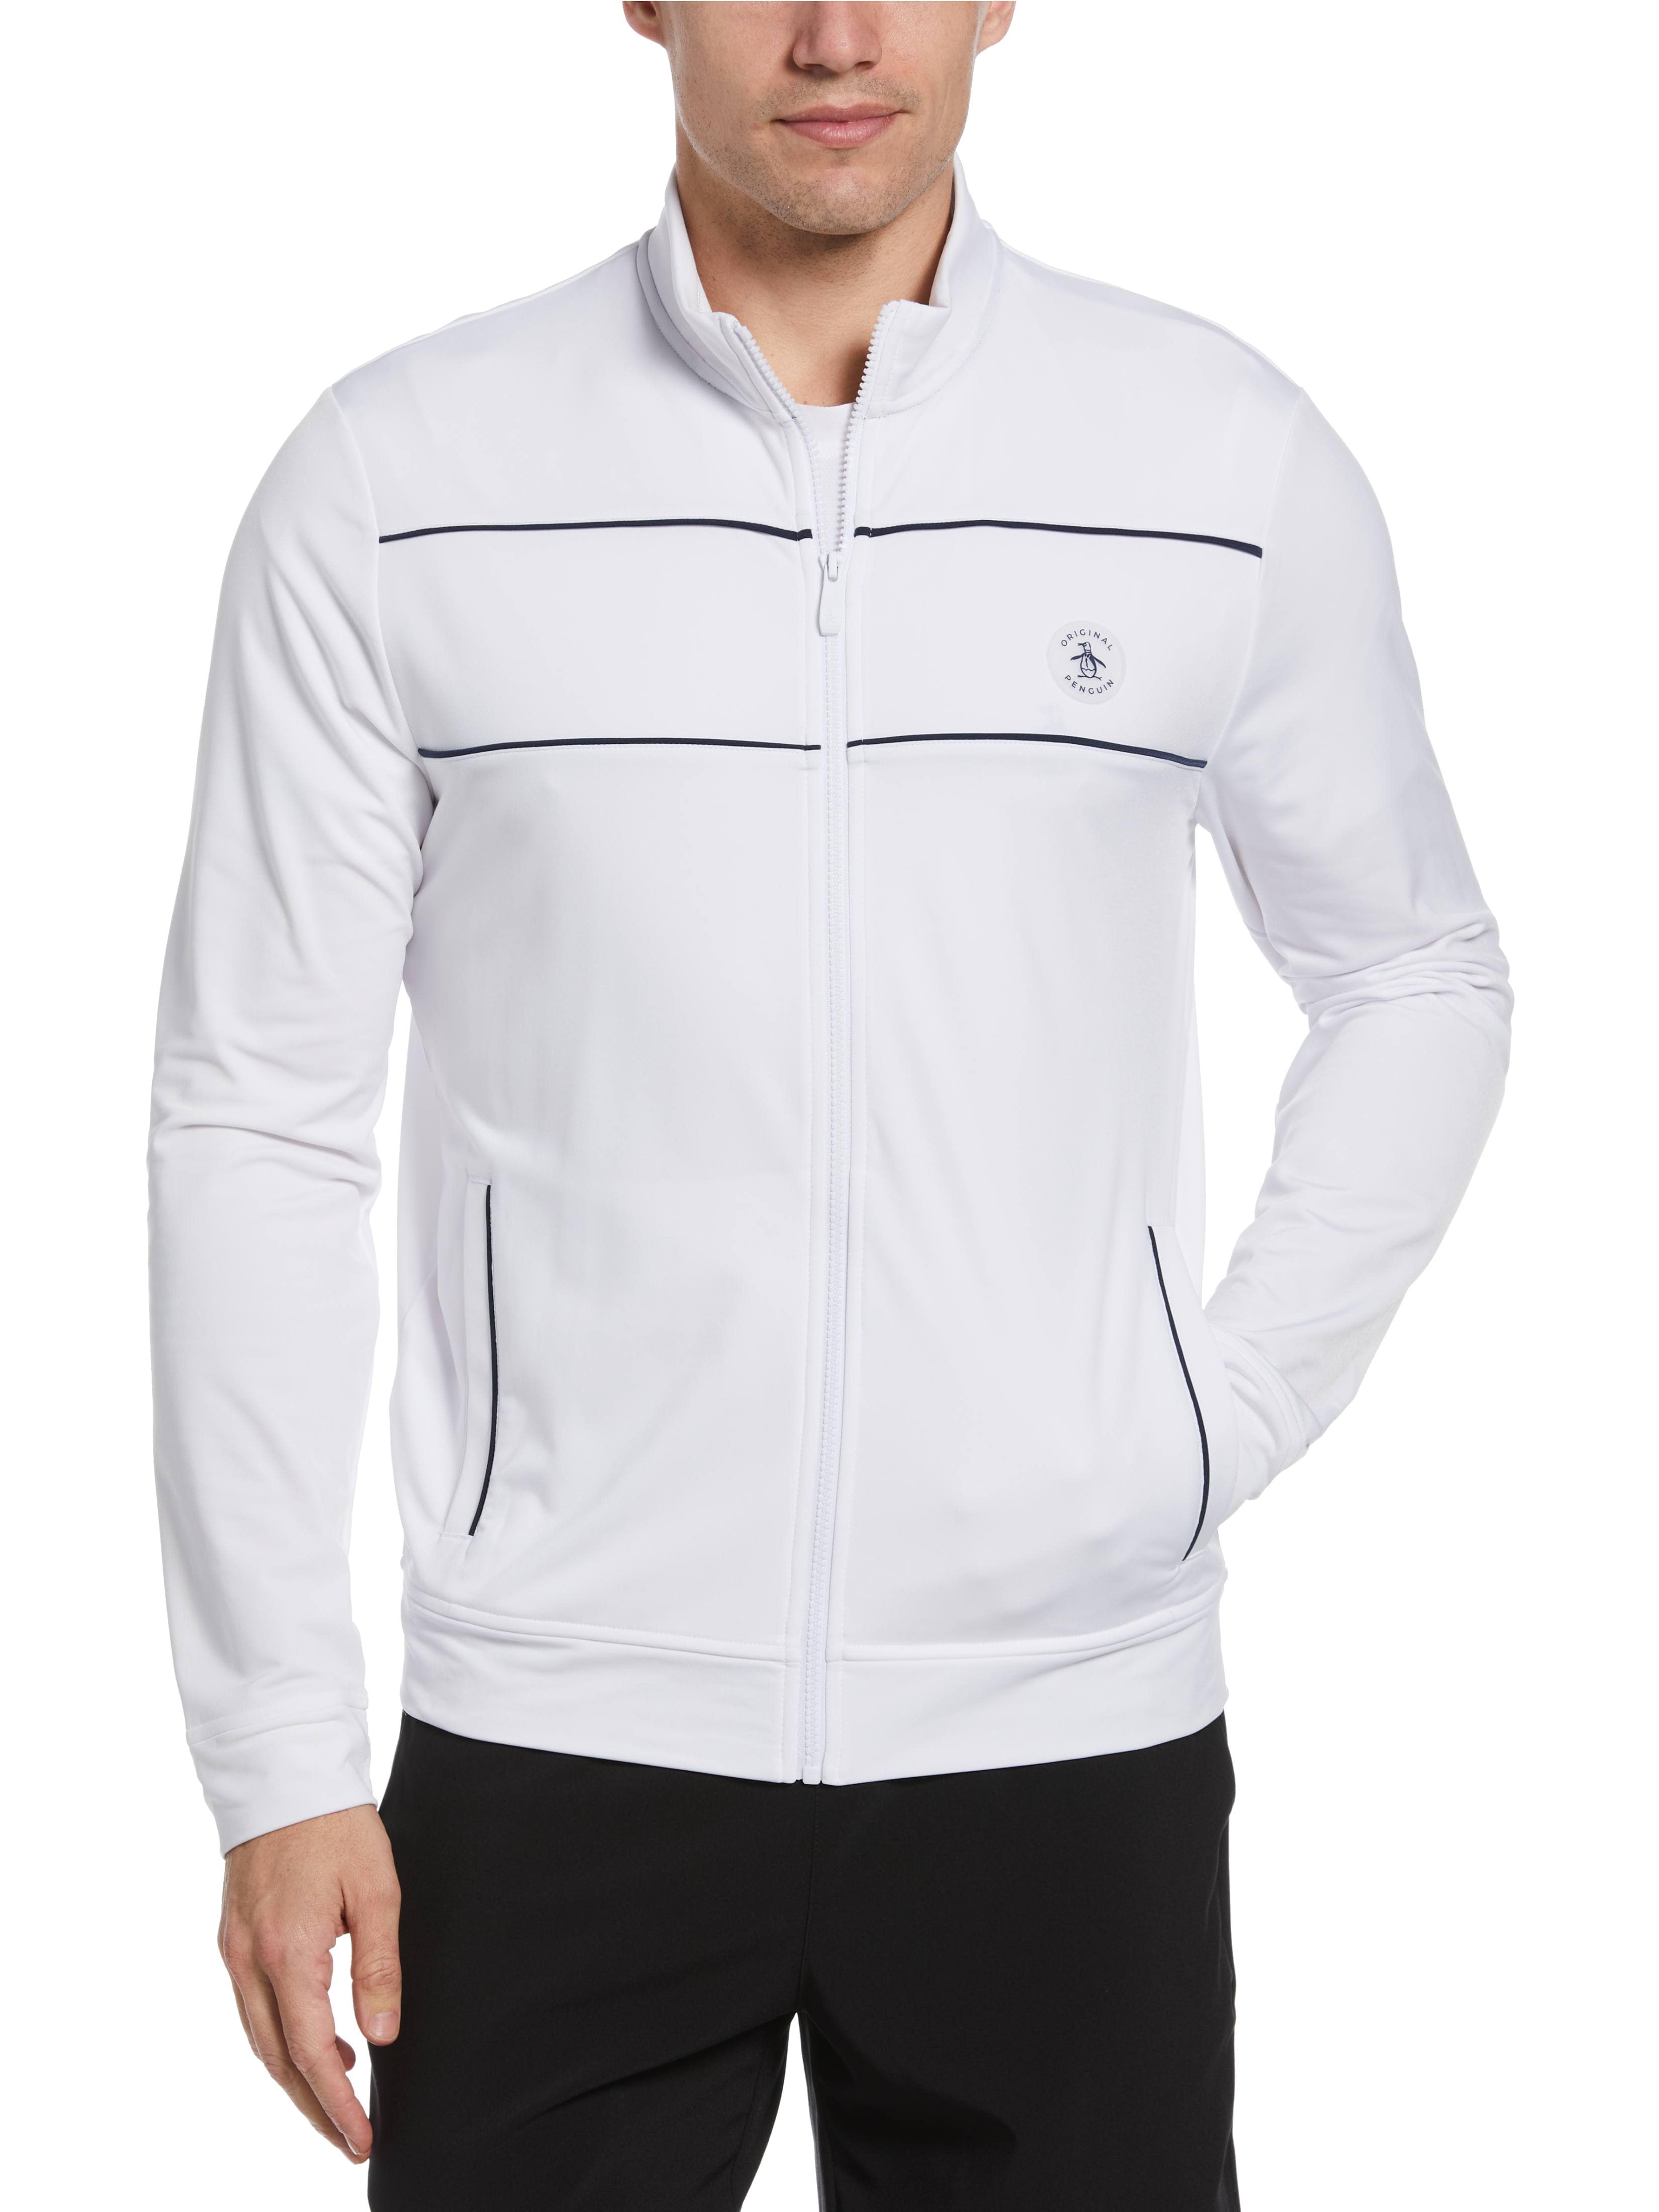 Original Penguin Mens Essential Tennis Track Jacket Top, Size 2XL, White, Polyester/Elastane | Golf Apparel Shop